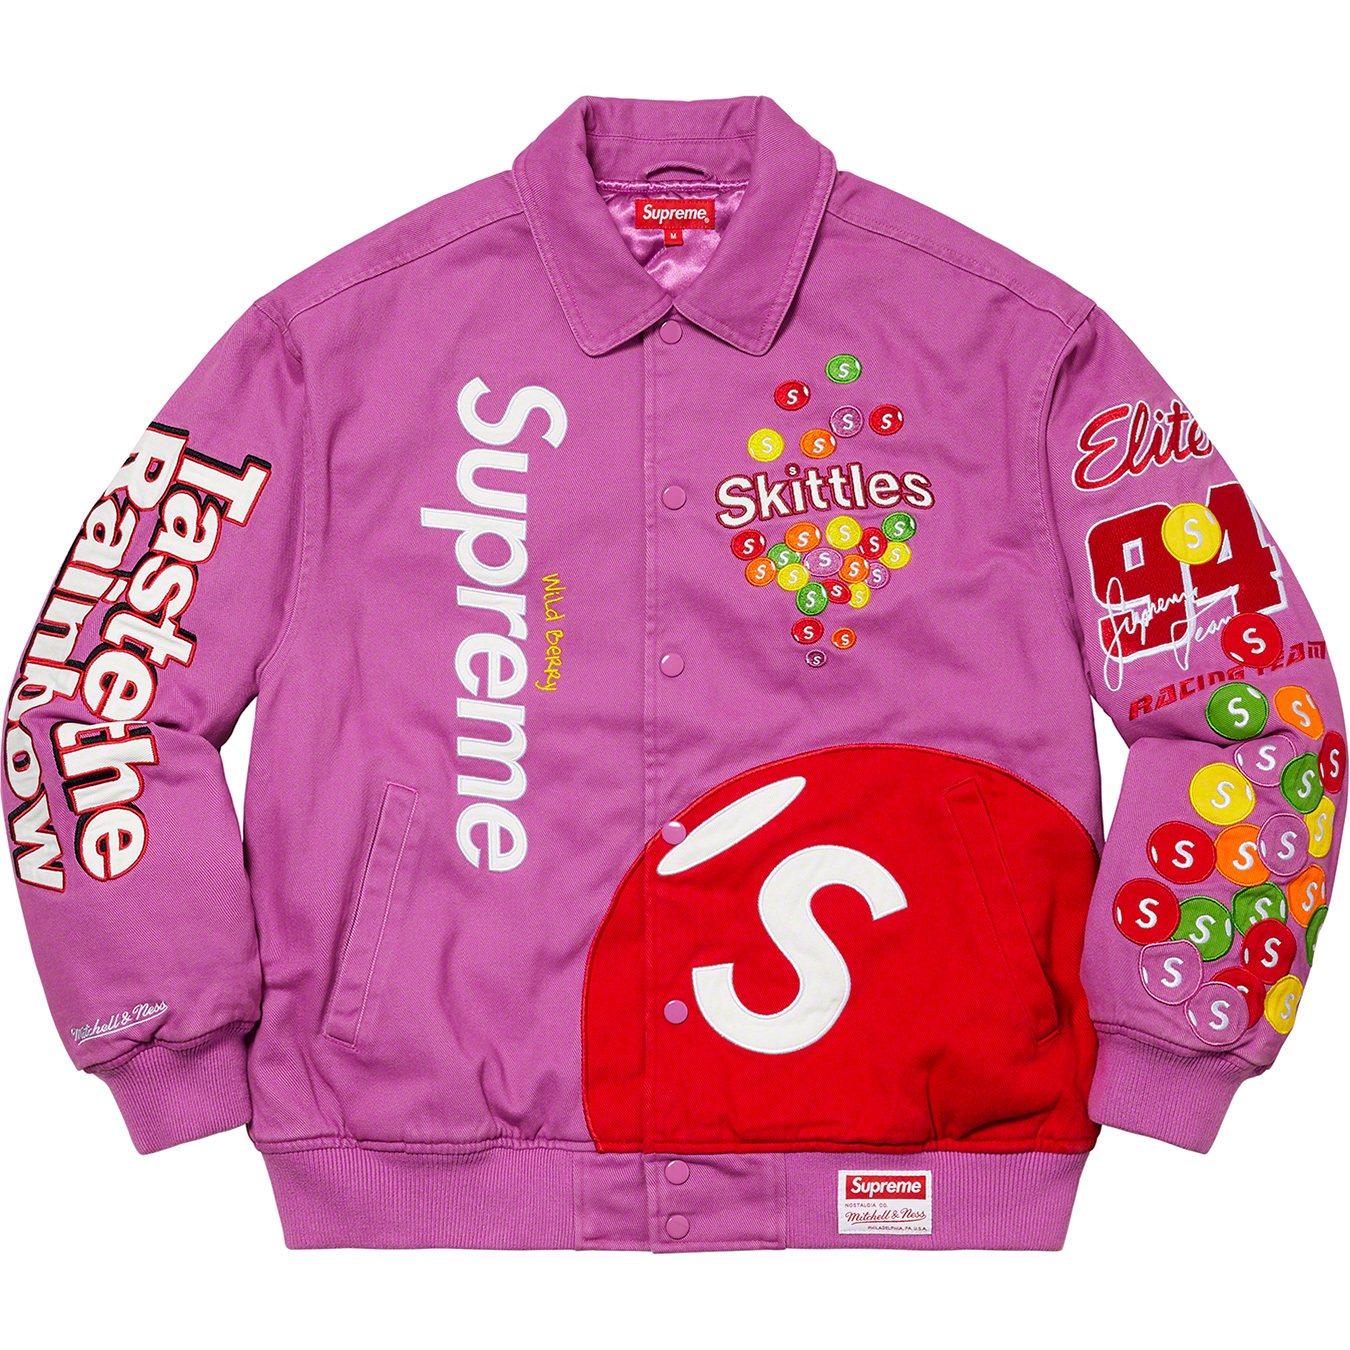 Supreme®/Skittles®/<wbr>Mitchell & Ness® Varsity Jacket - Supreme 